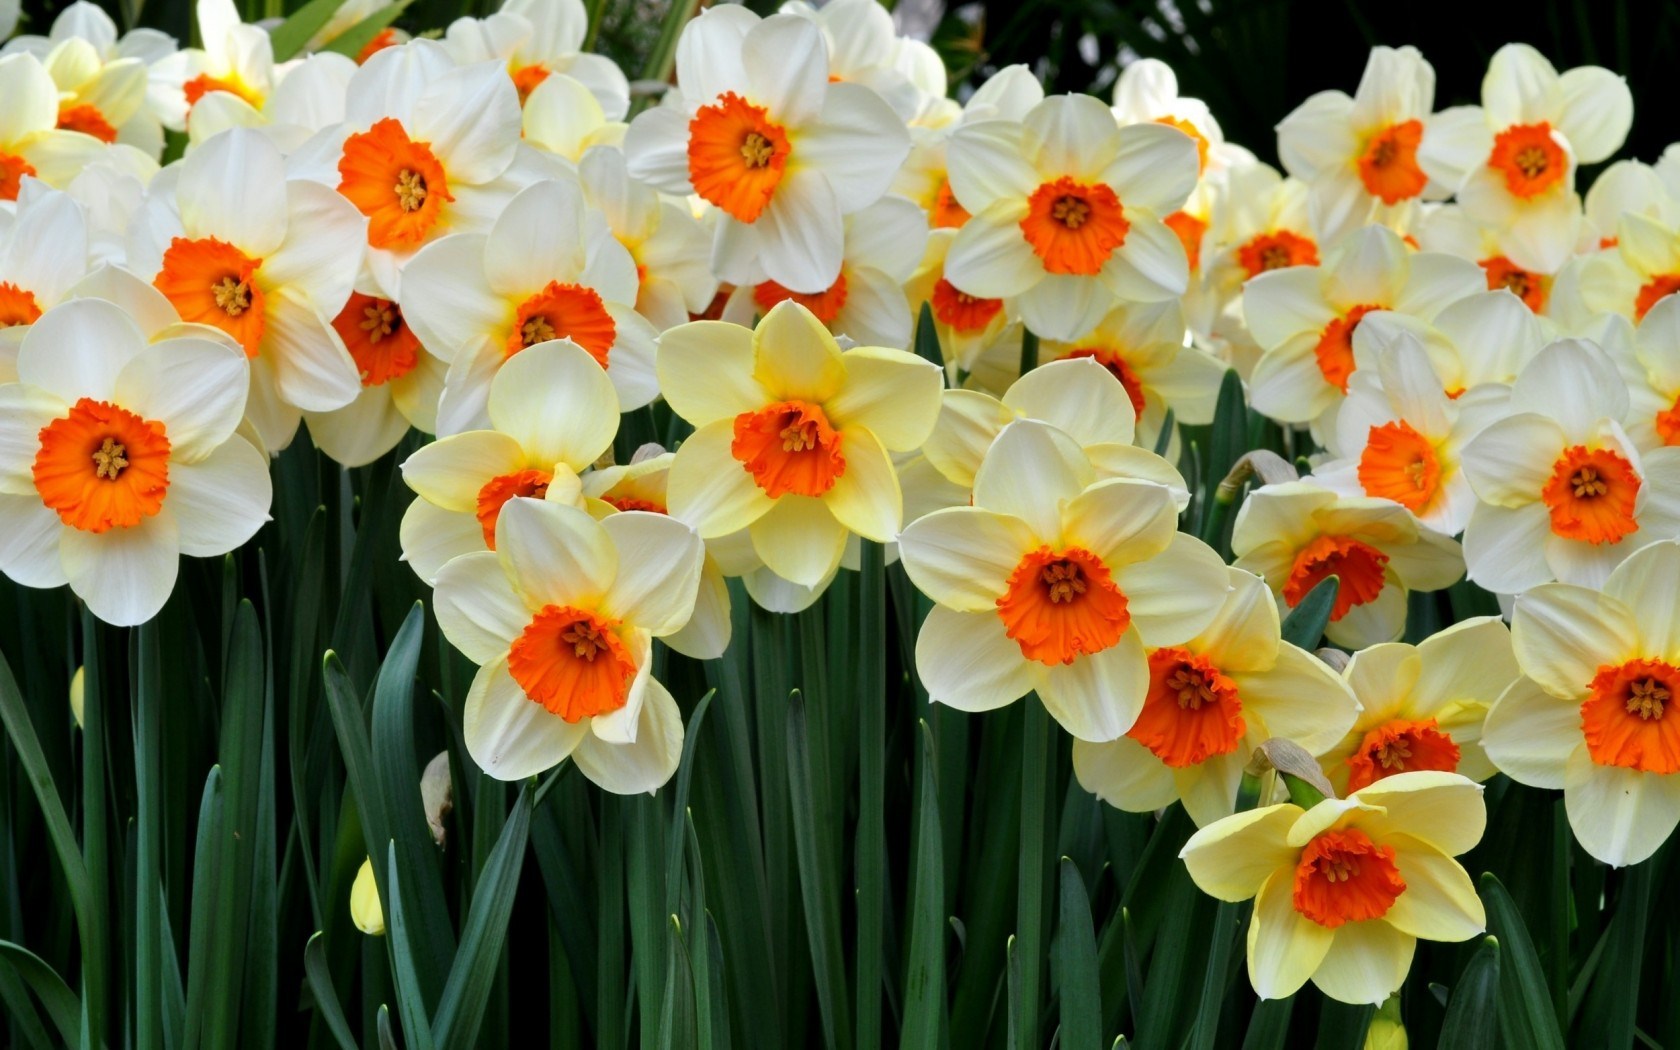 Daffodil Day Daffodil Day Wallpaper 37474587 Fanpop